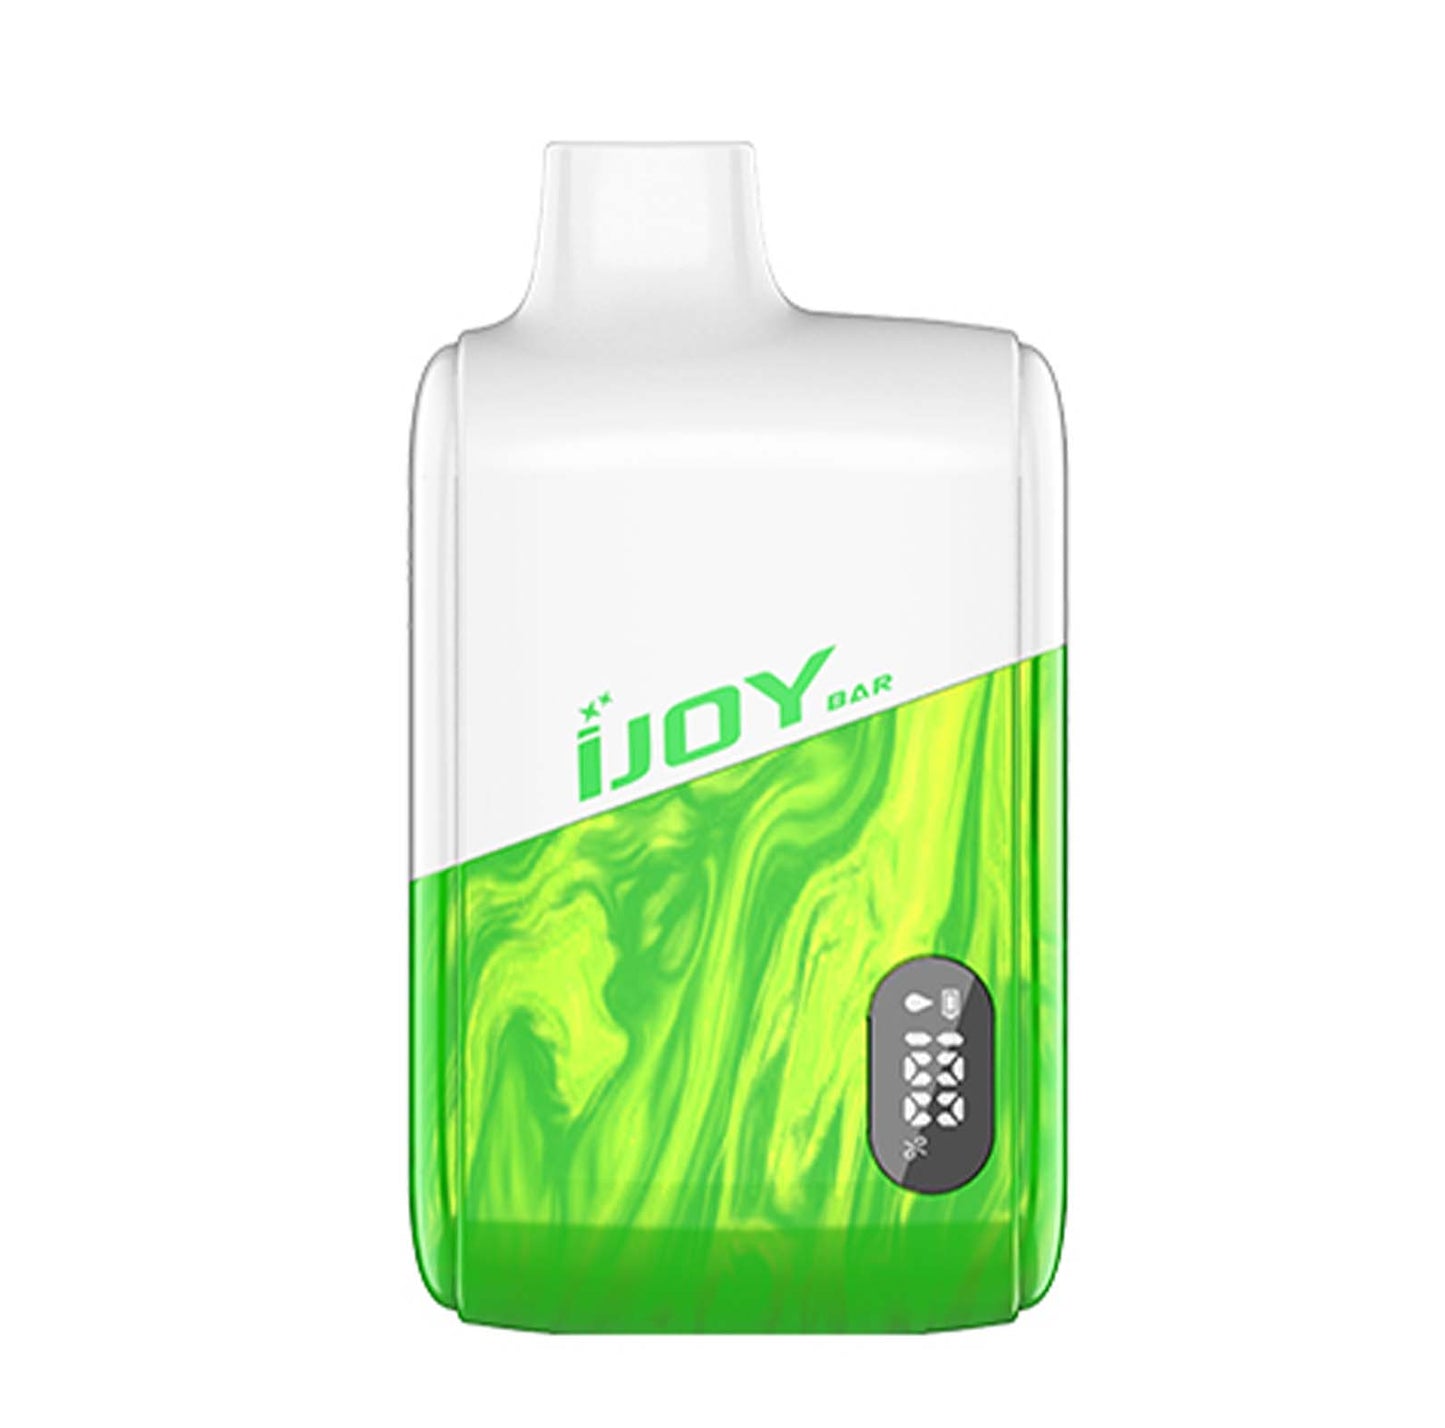 iJOY Bar Smart Vape | 8000 Puffs | Free Ship Promo - Apple Juice - BLANKZ!